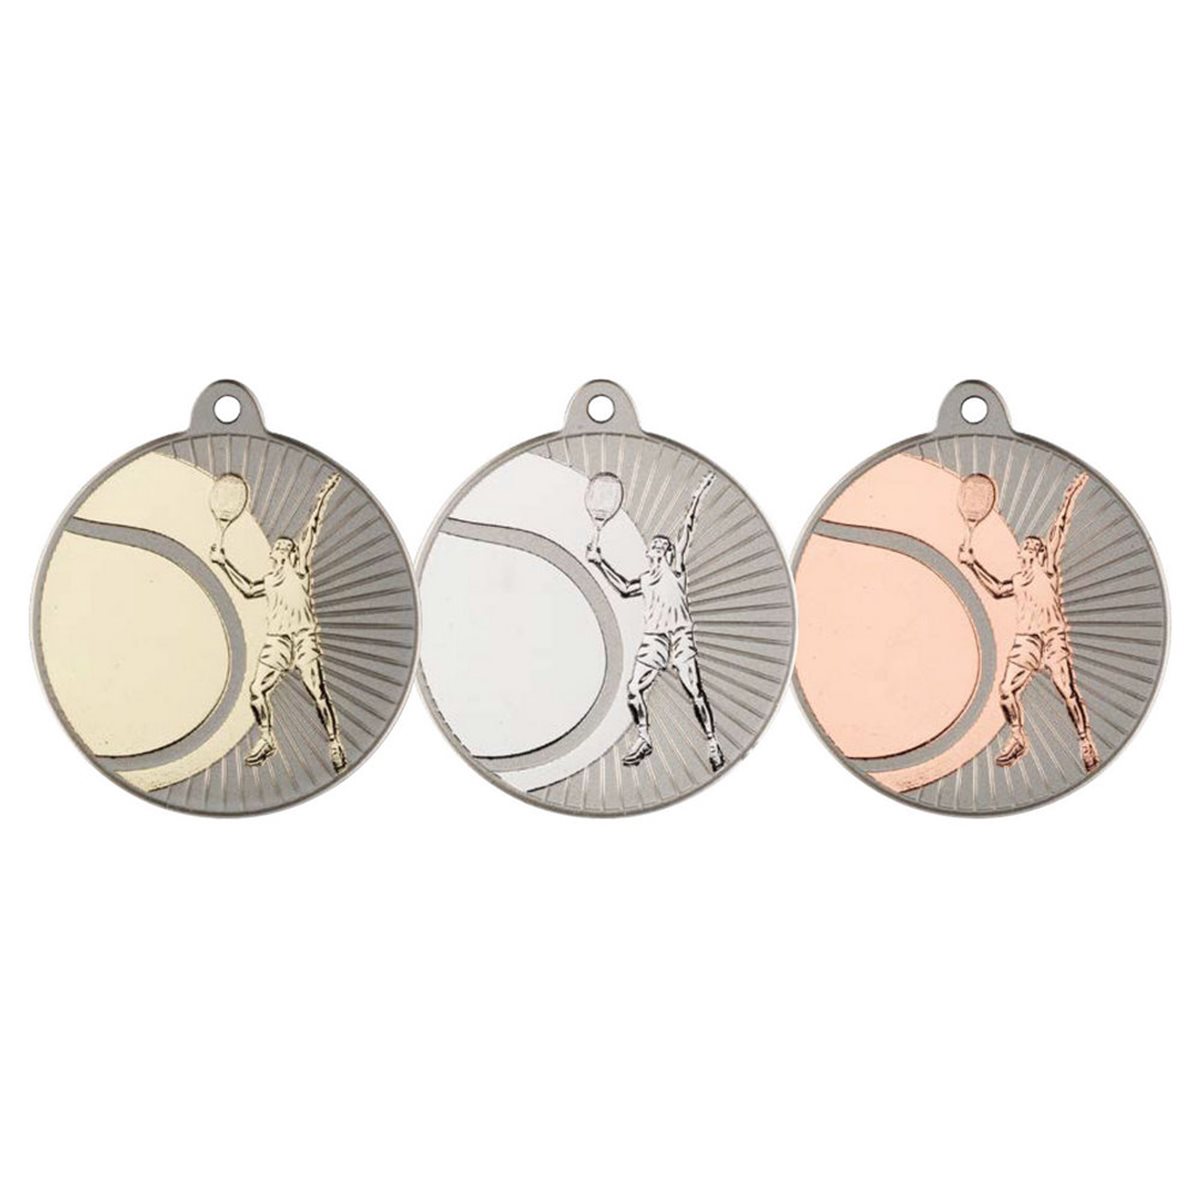 50mm Silver Two Colour Tennis Medal MV21